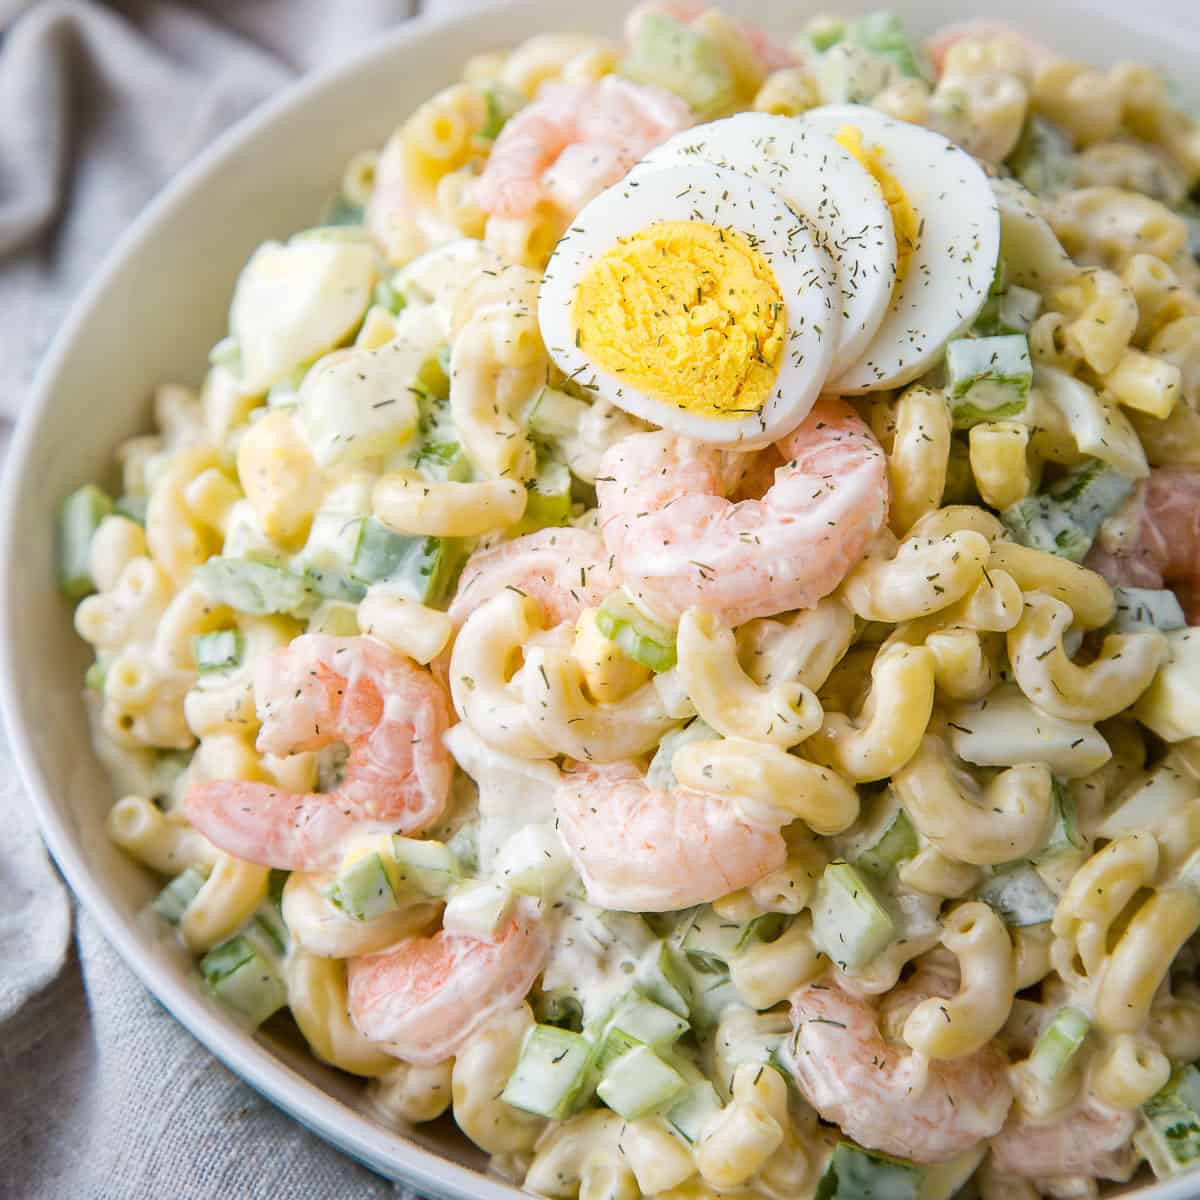 https://www.giftofhospitality.com/wp-content/uploads/2022/07/macaroni-salad-shrimp-square.jpg